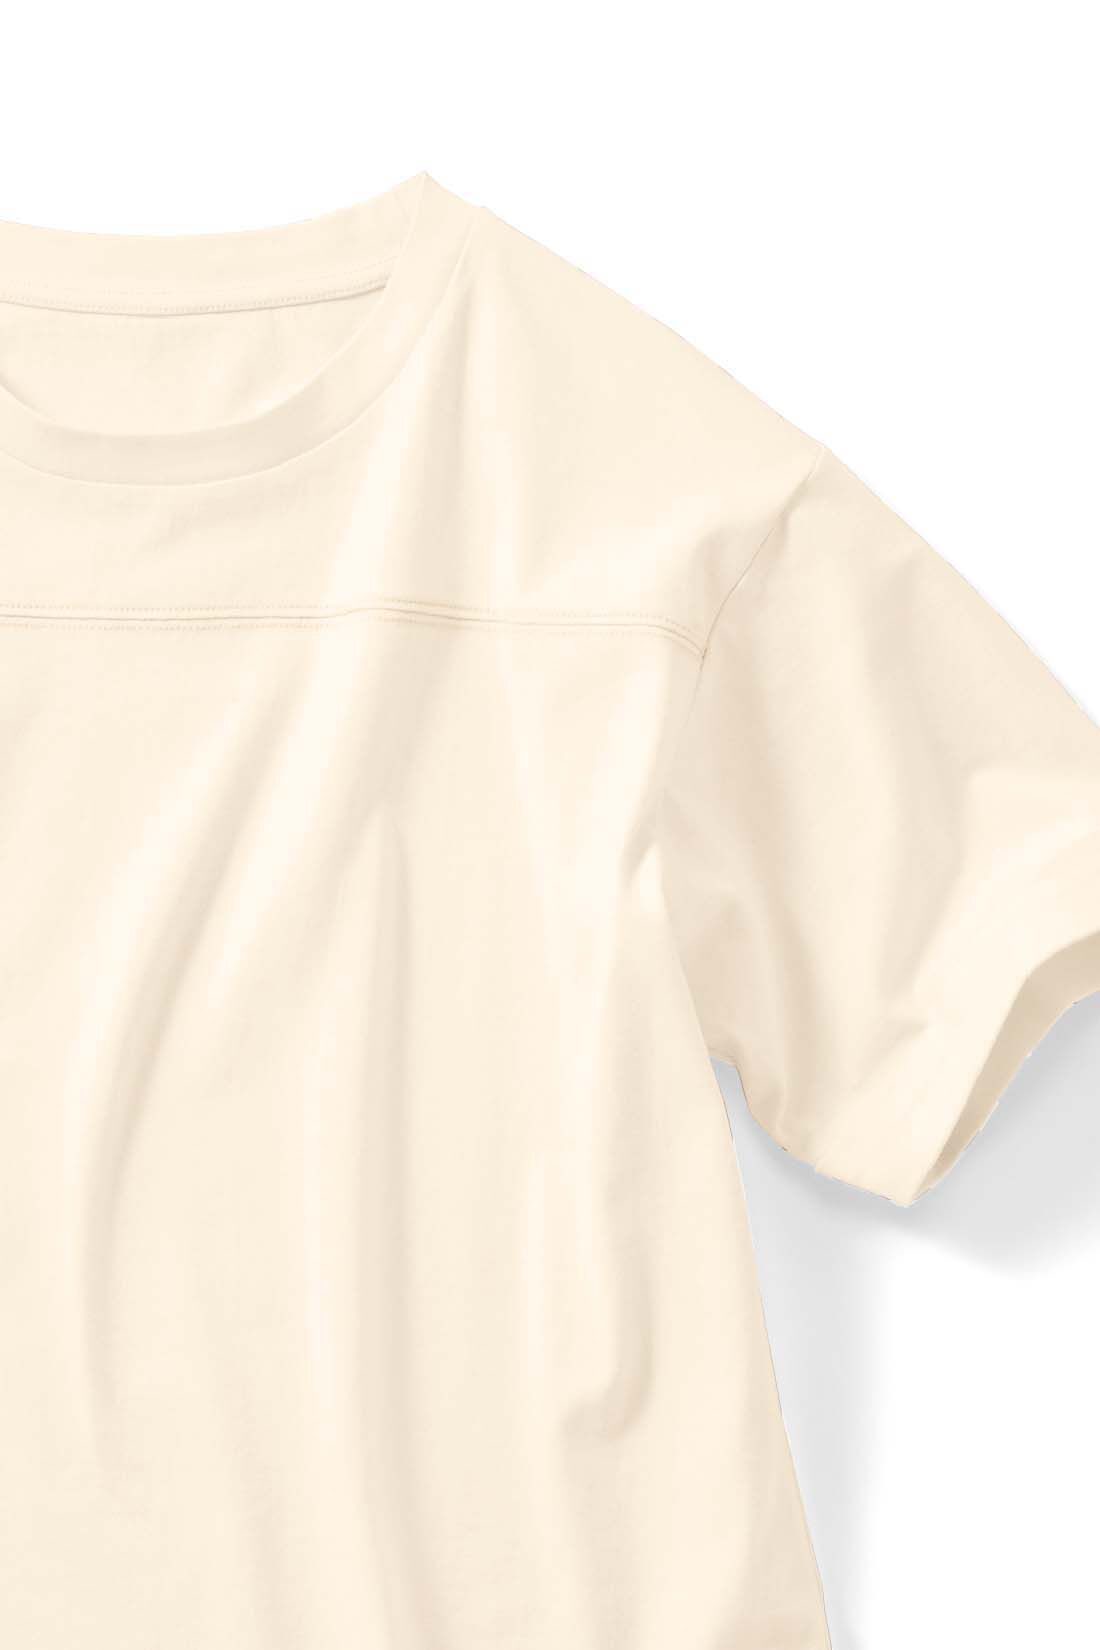 Live in  comfort|Live love cottonプロジェクト　リブ イン コンフォート　栞里ちゃんとつくったオーガニックコットンの大人ナンバーTシャツ〈オフホワイト〉|天竺（じく）編みで、ほどよい厚みのインド産オーガニックコットン100％。